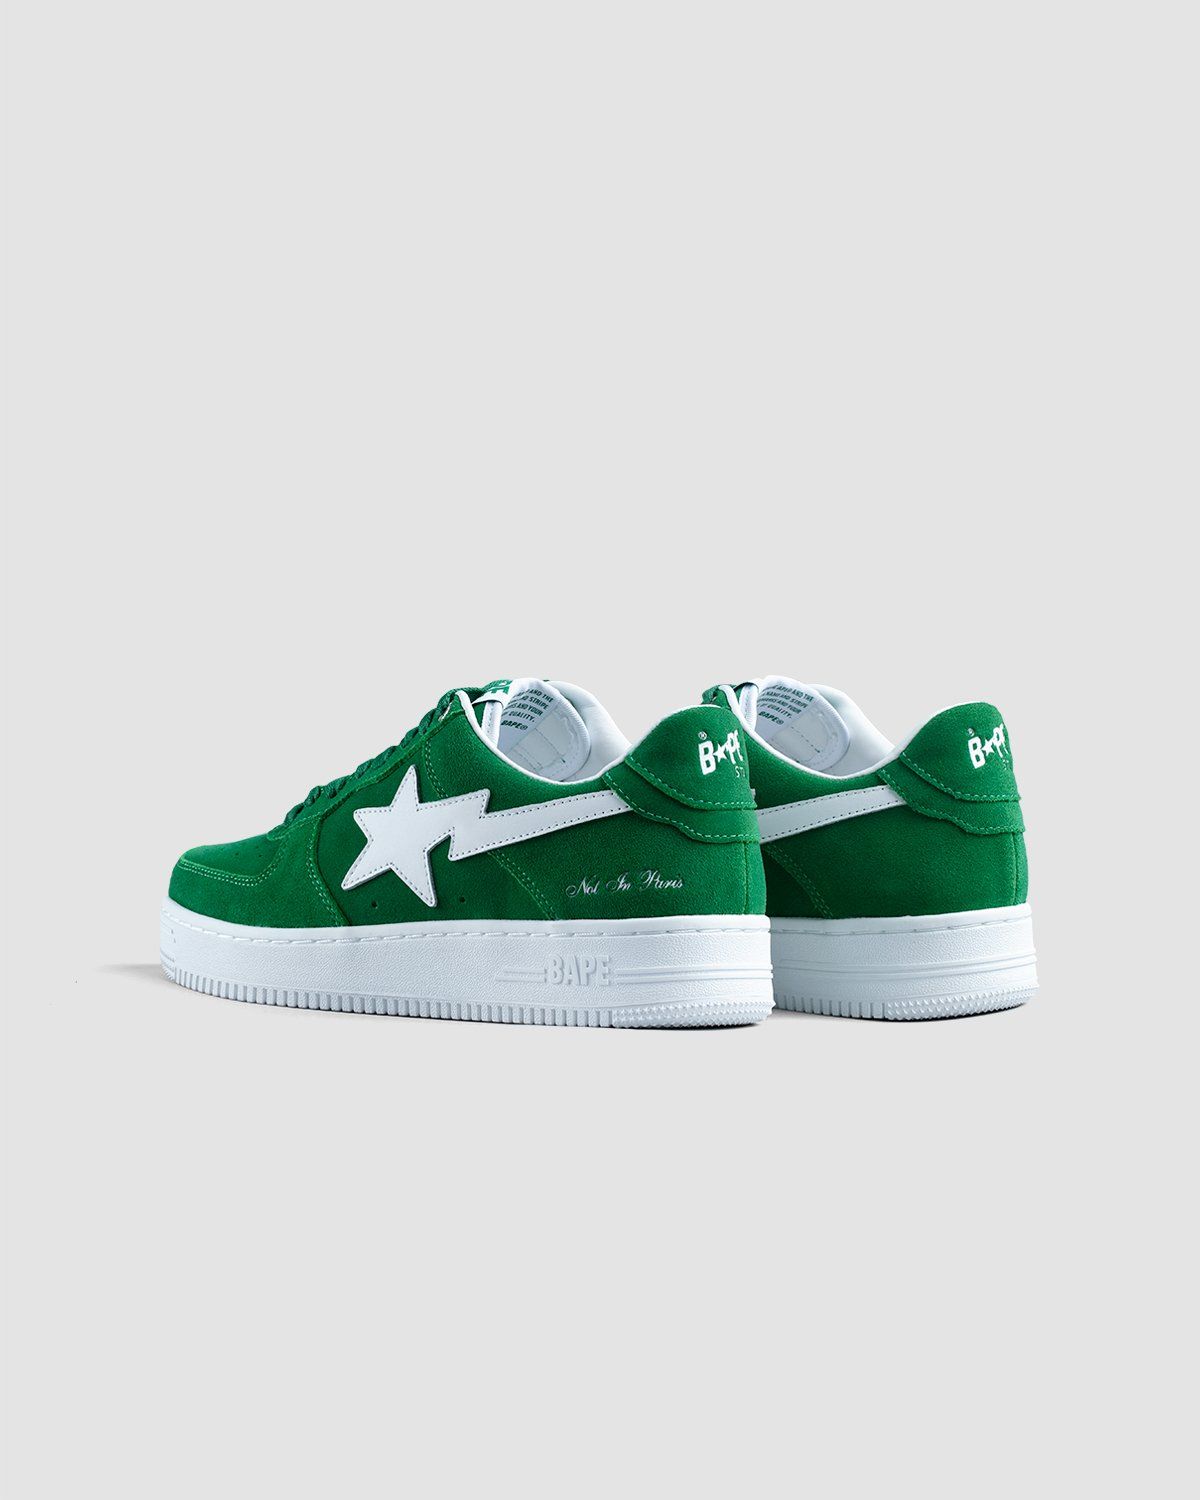 BAPE x Highsnobiety – BAPE STA Green - Low Top Sneakers - Green - Image 3